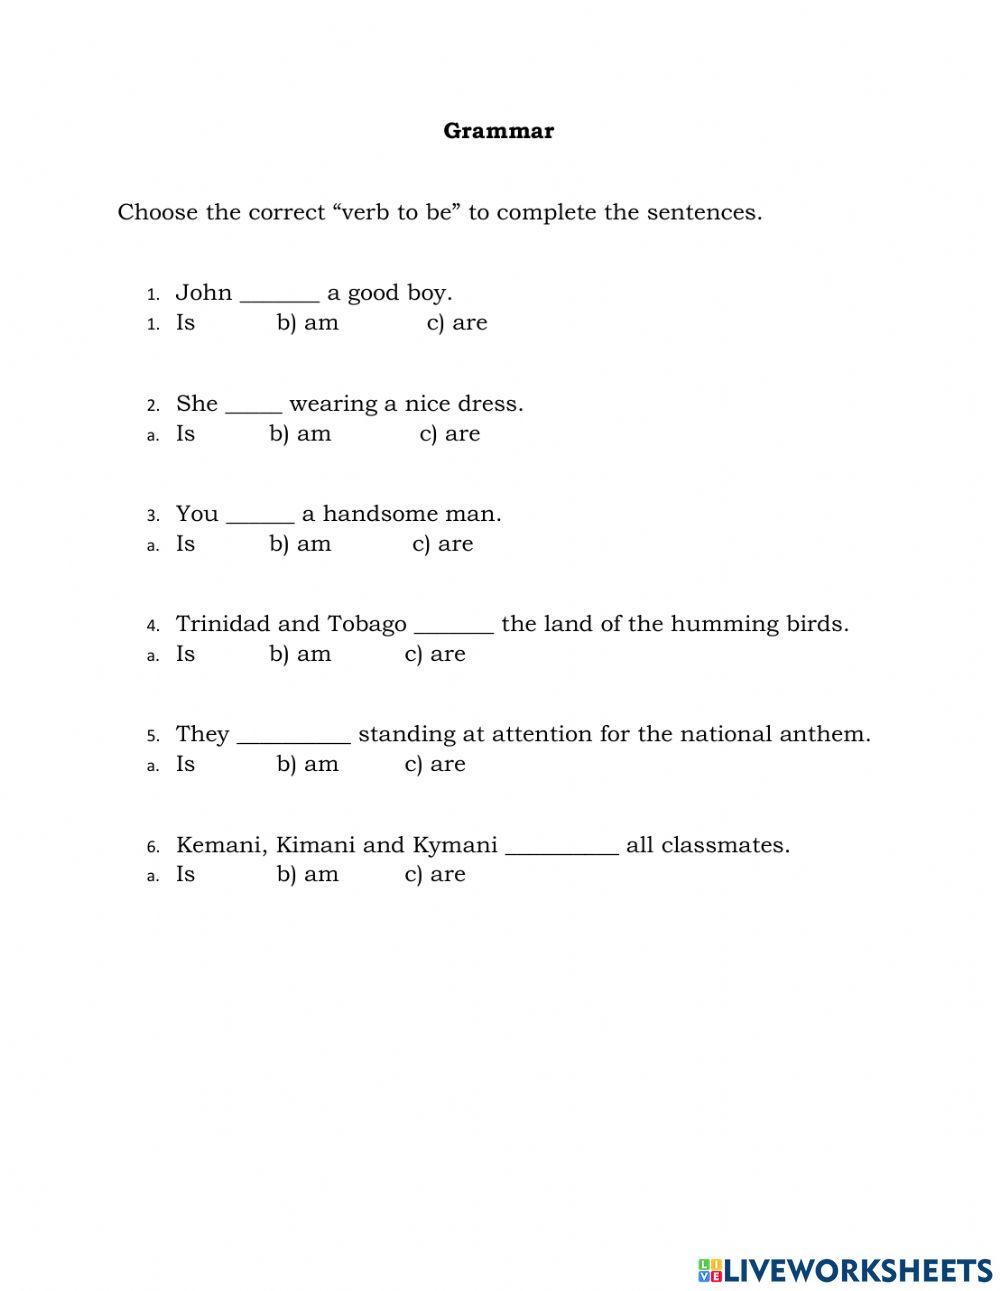 Grammar Practice Worksheet